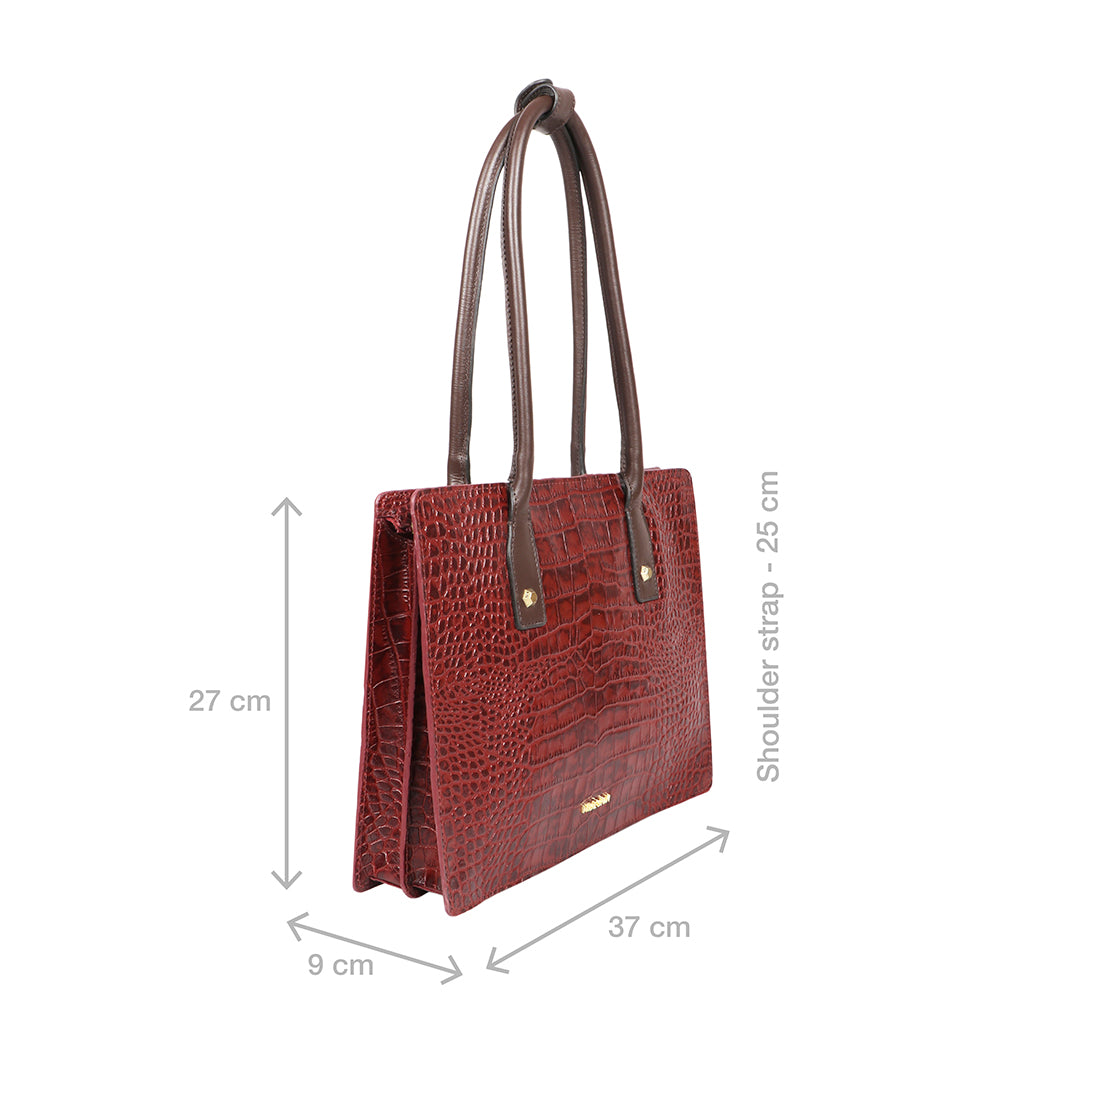 Hidesign Sling Bag Best Price in India, Hidesign Sling Bag Compare Price  List From Hidesign Sling Bags 20810968